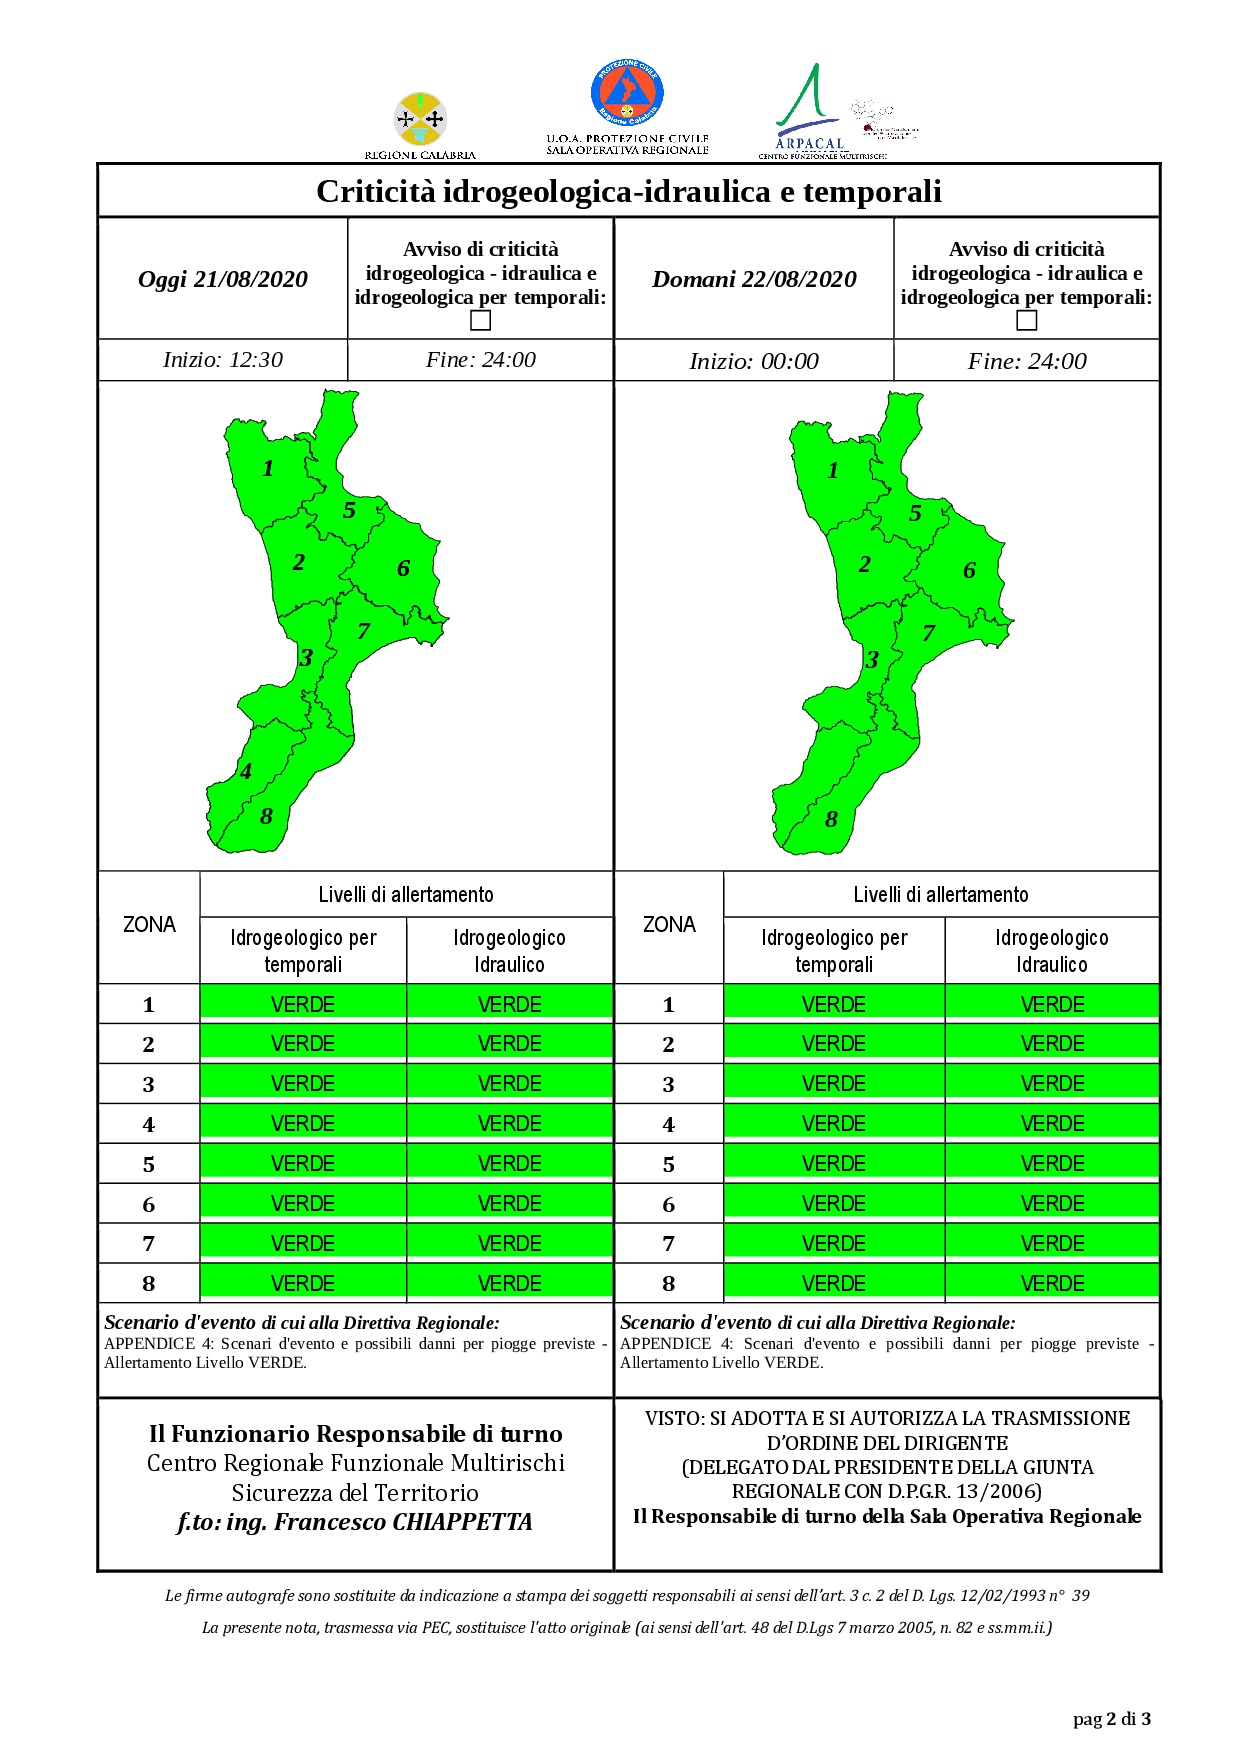 Criticità idrogeologica-idraulica e temporali in Calabria 21-08-2020